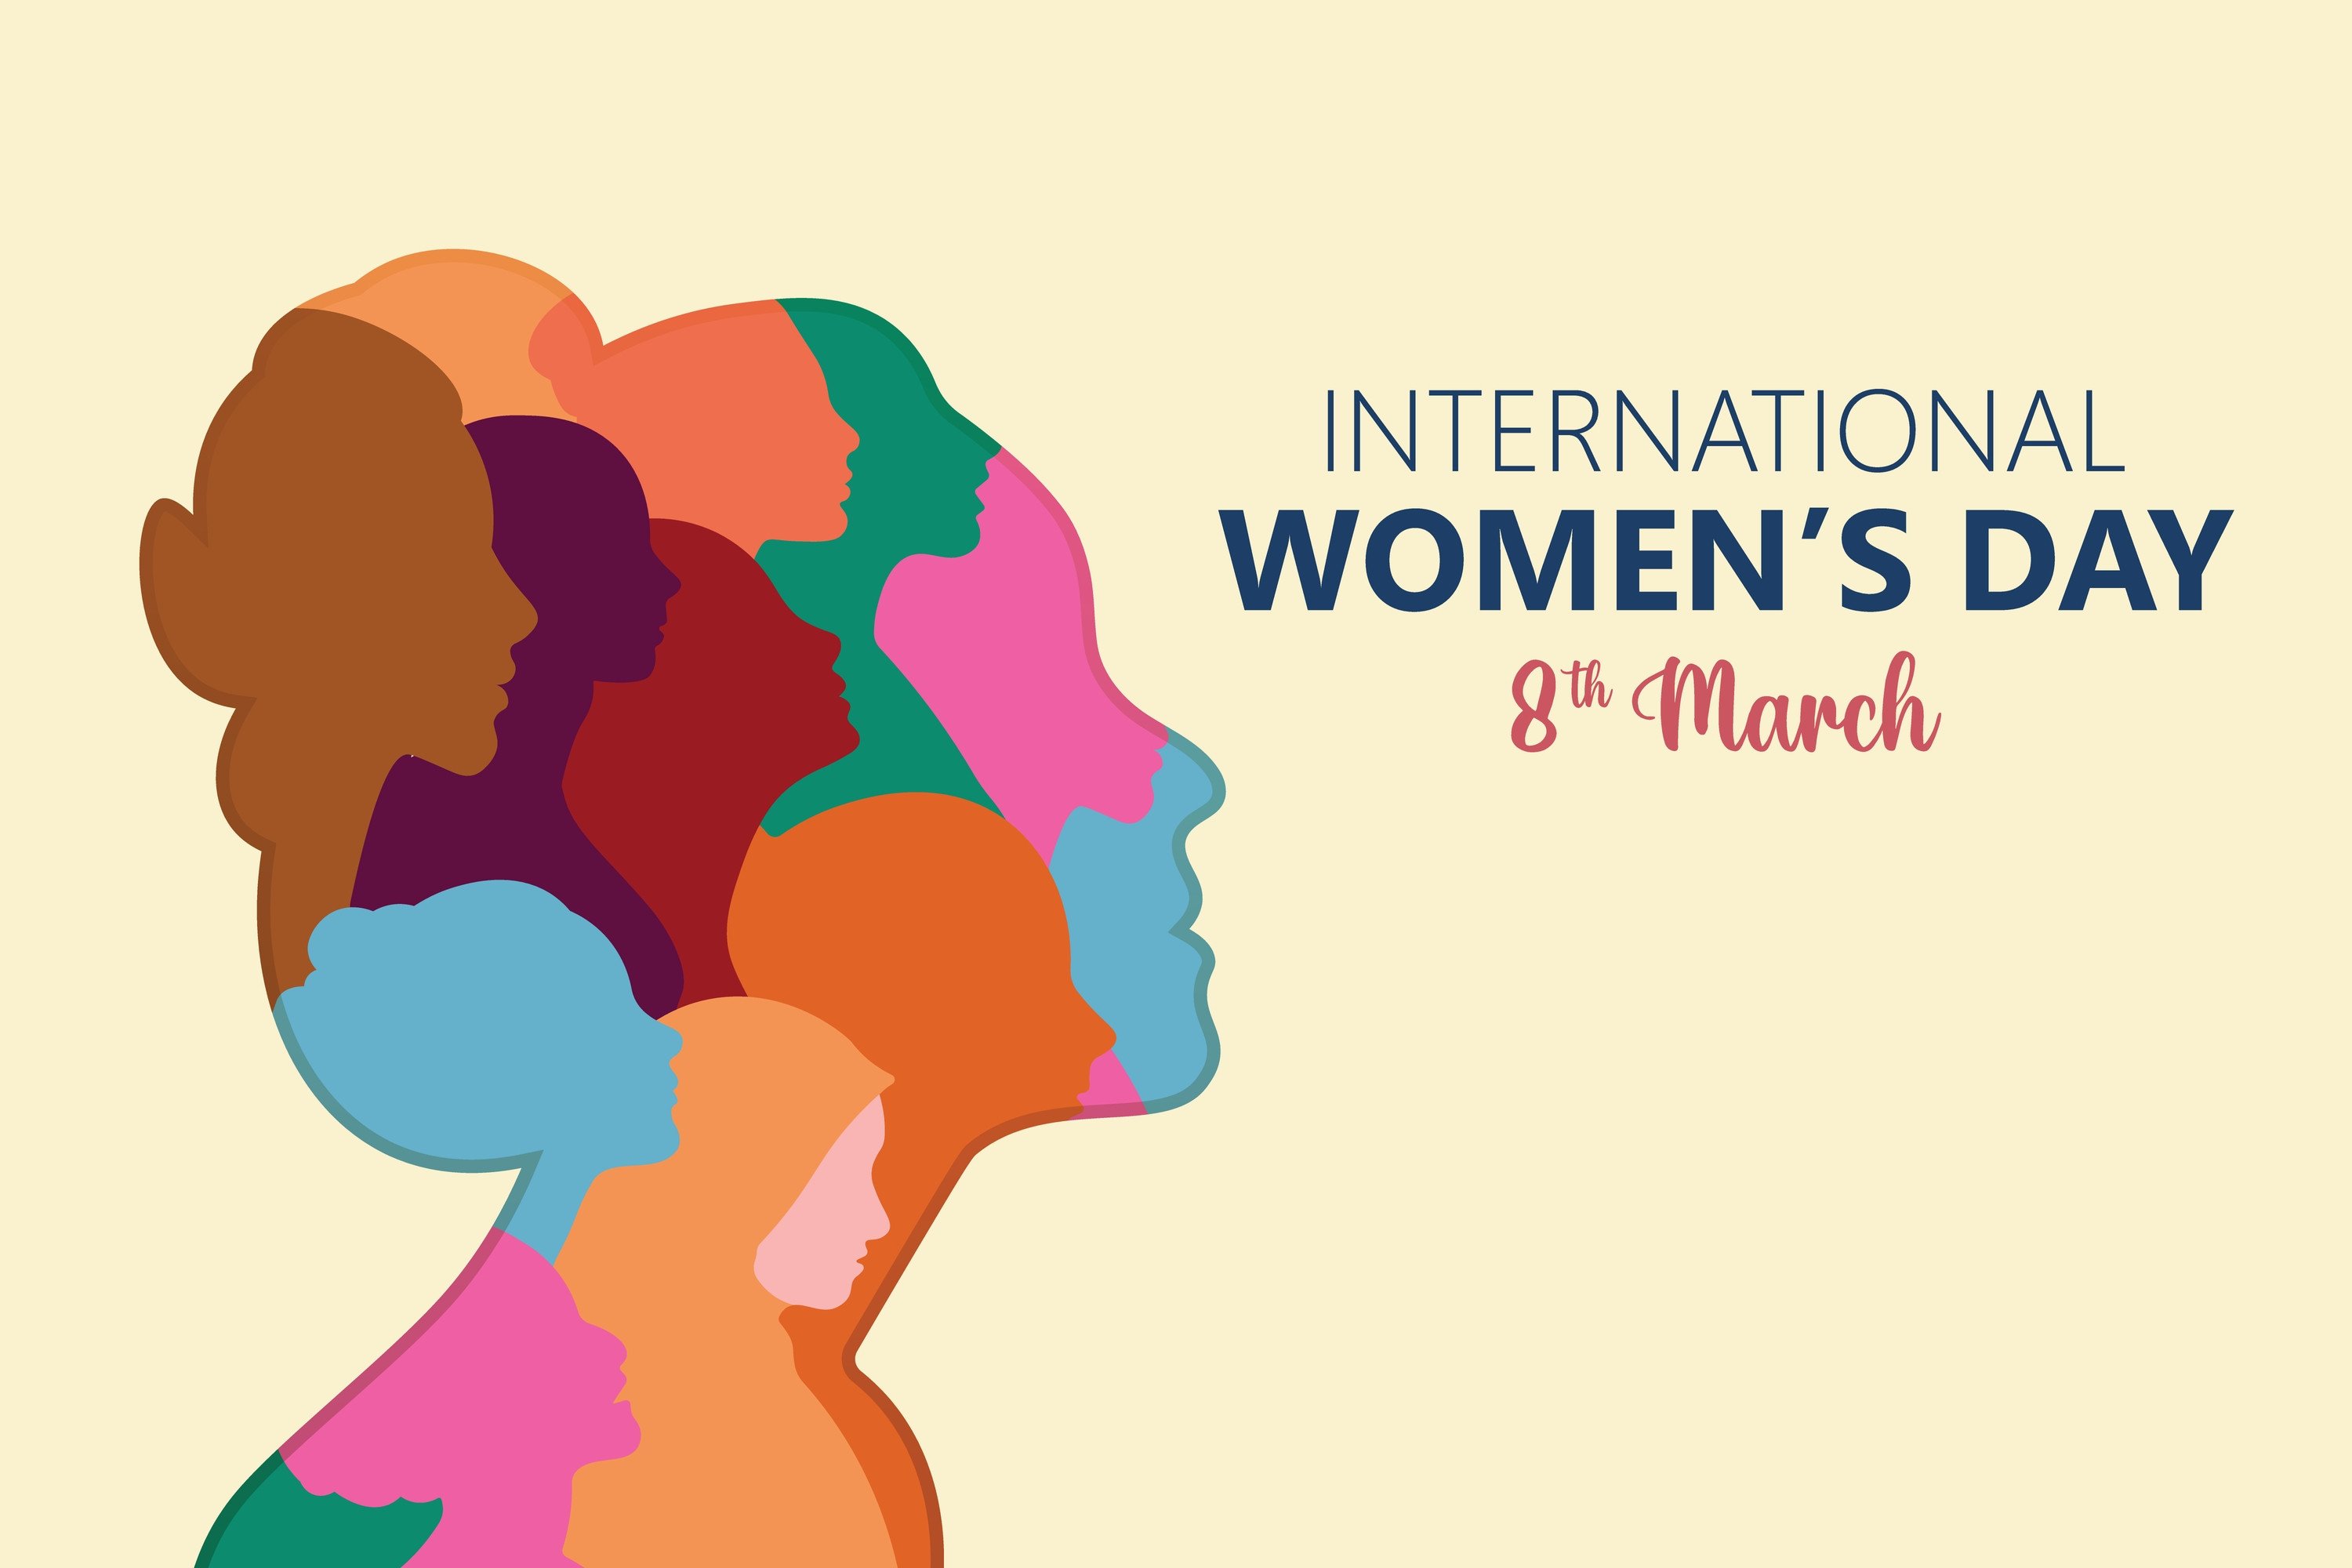 International Women’s day is celebrated worldwide on March 8. Photo: Shutterstock